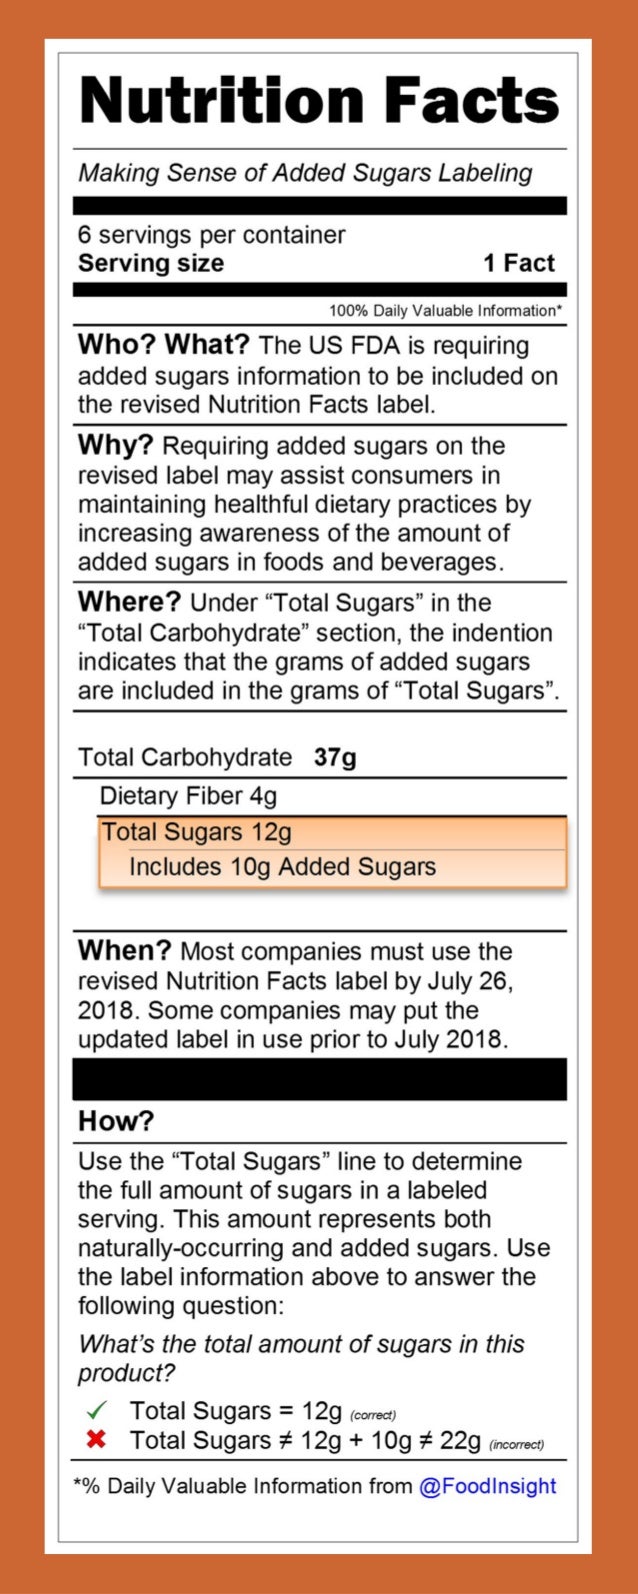 making-sense-of-added-sugars-labeling-1-638.jpg